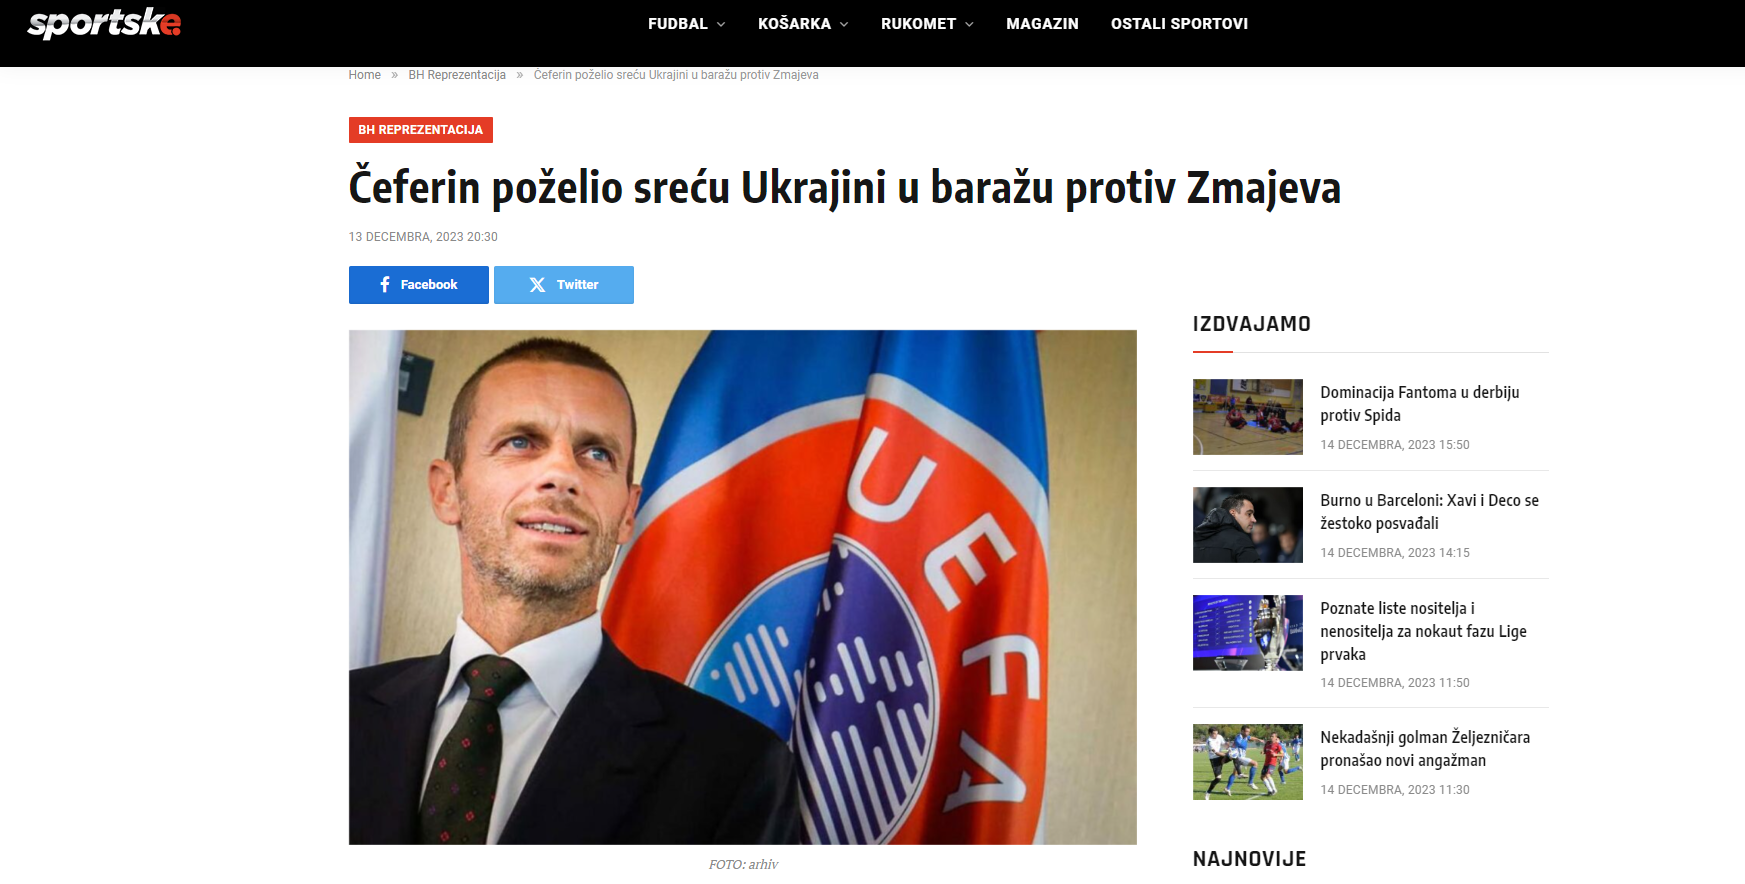 Bosnia says Čeferin tried to make amends with Ukraine